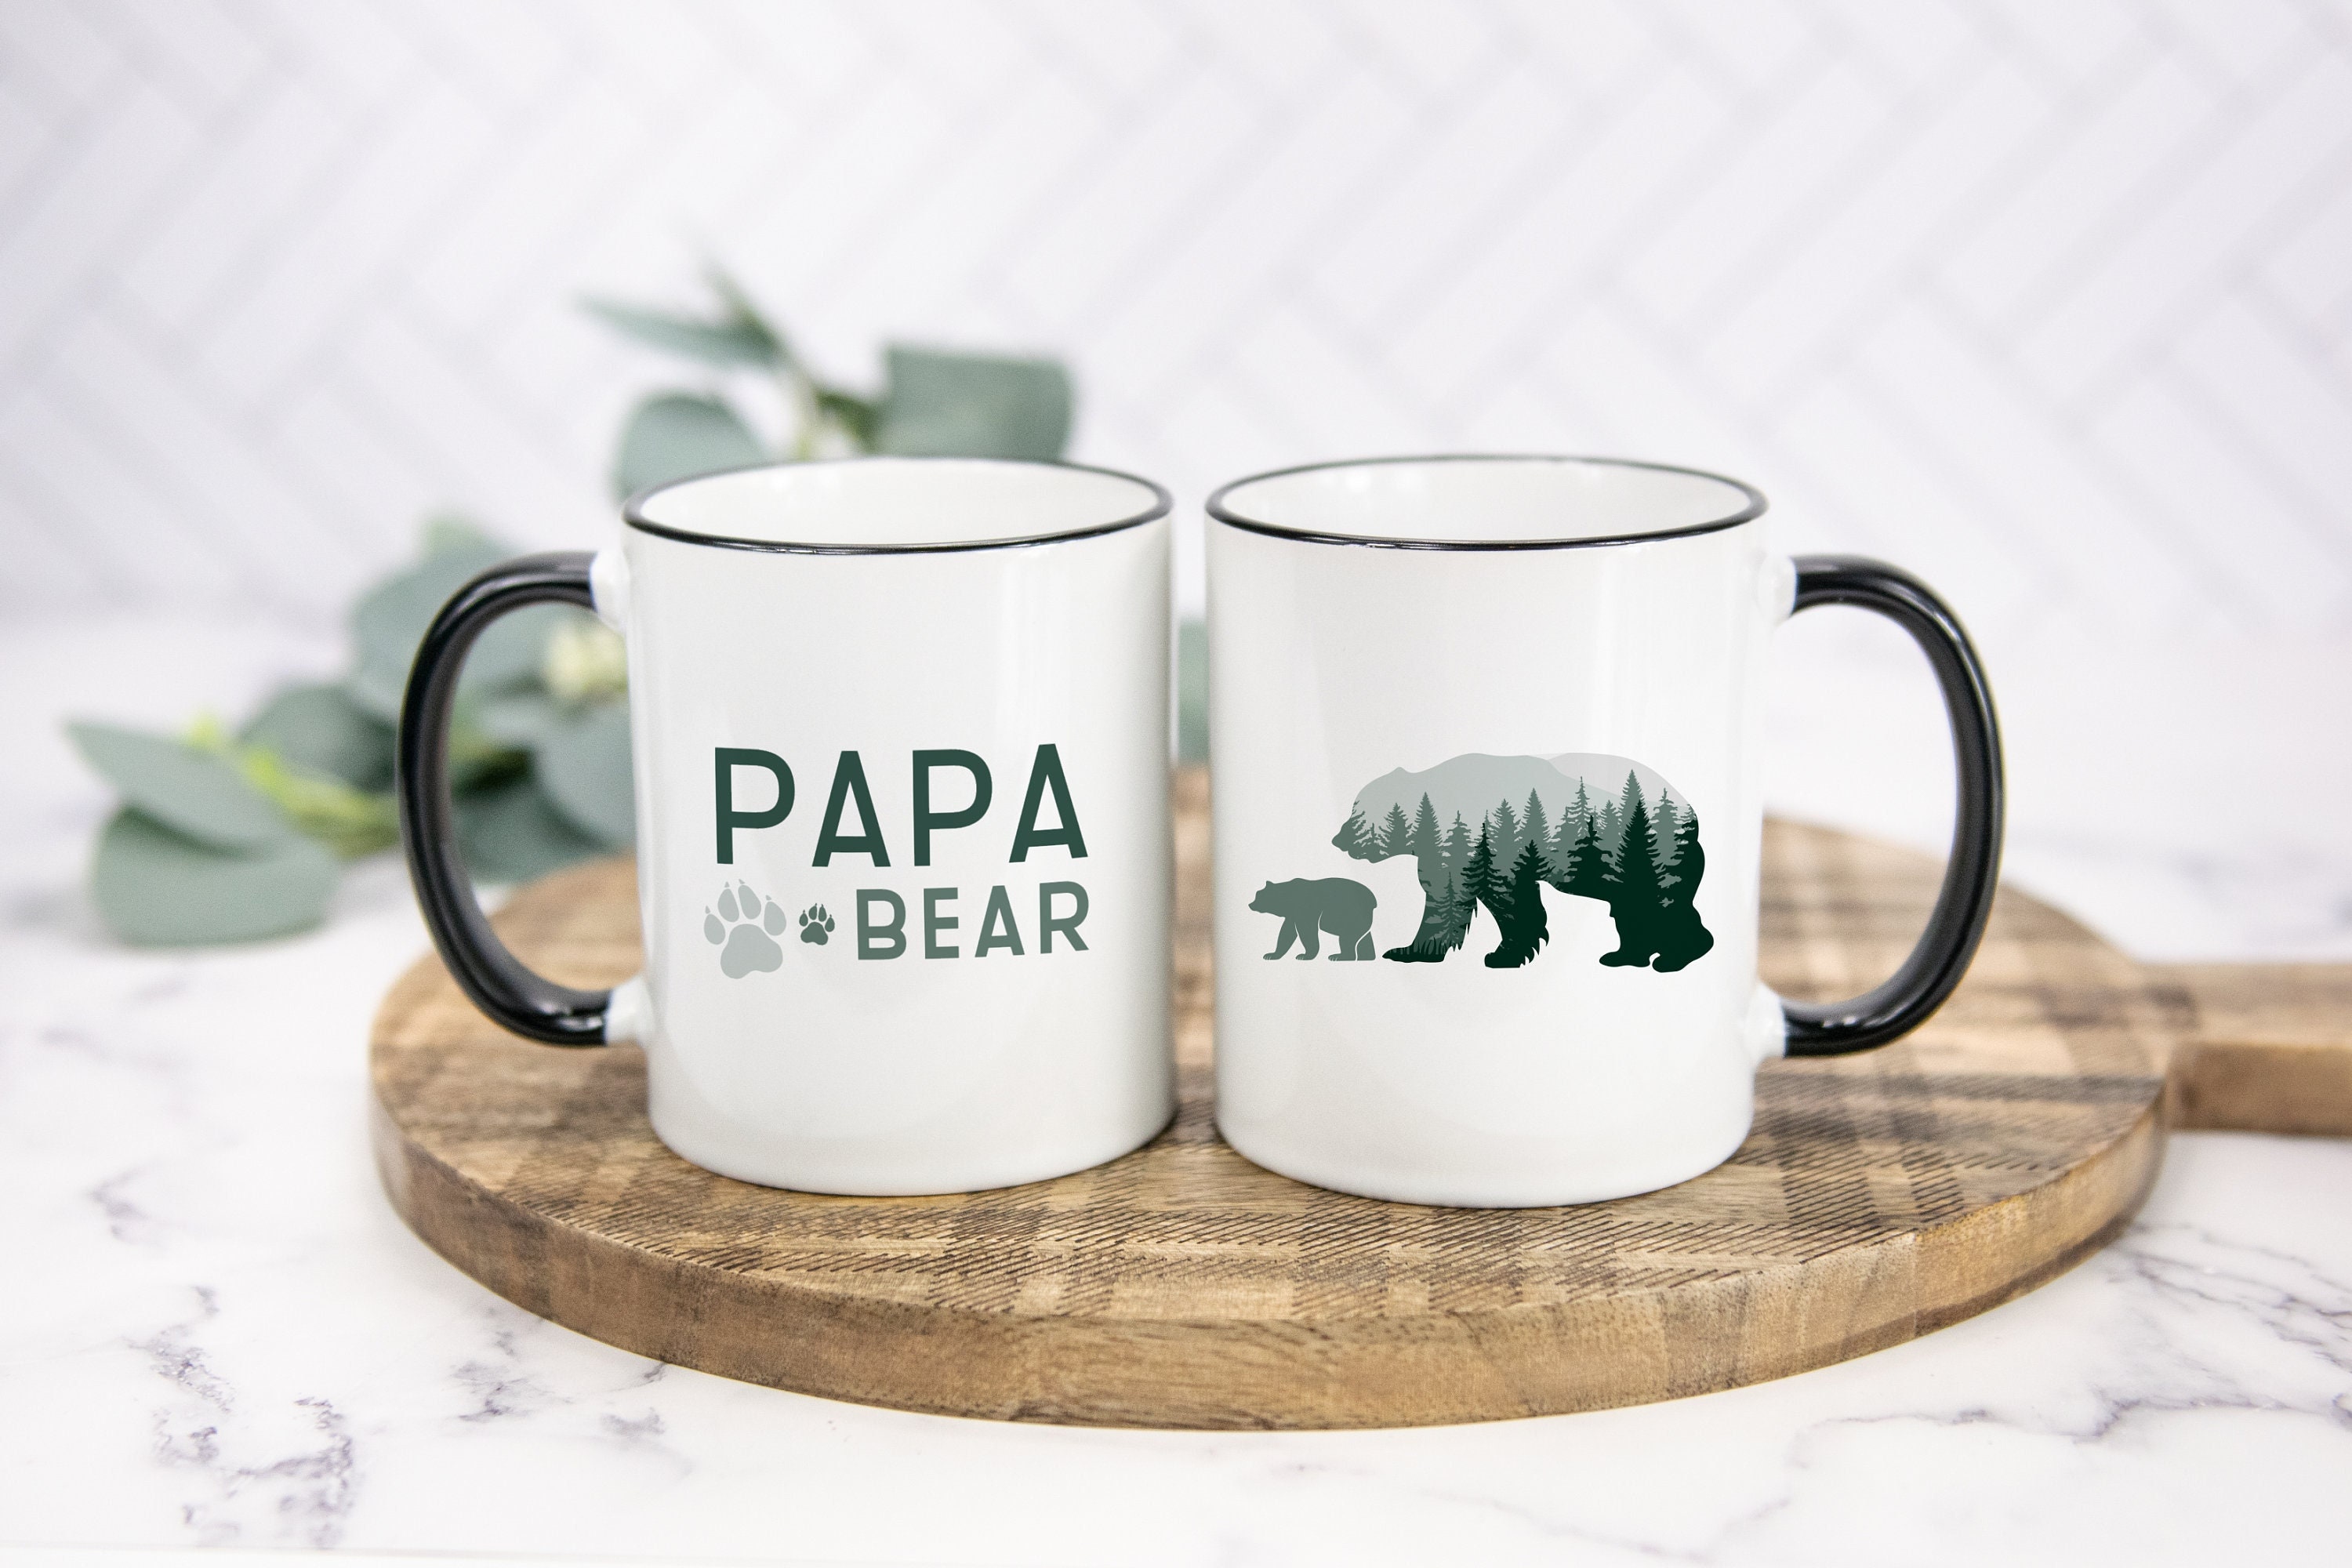 Mama and Papa Bear Mugs and Coasters - gJoolz Gifts